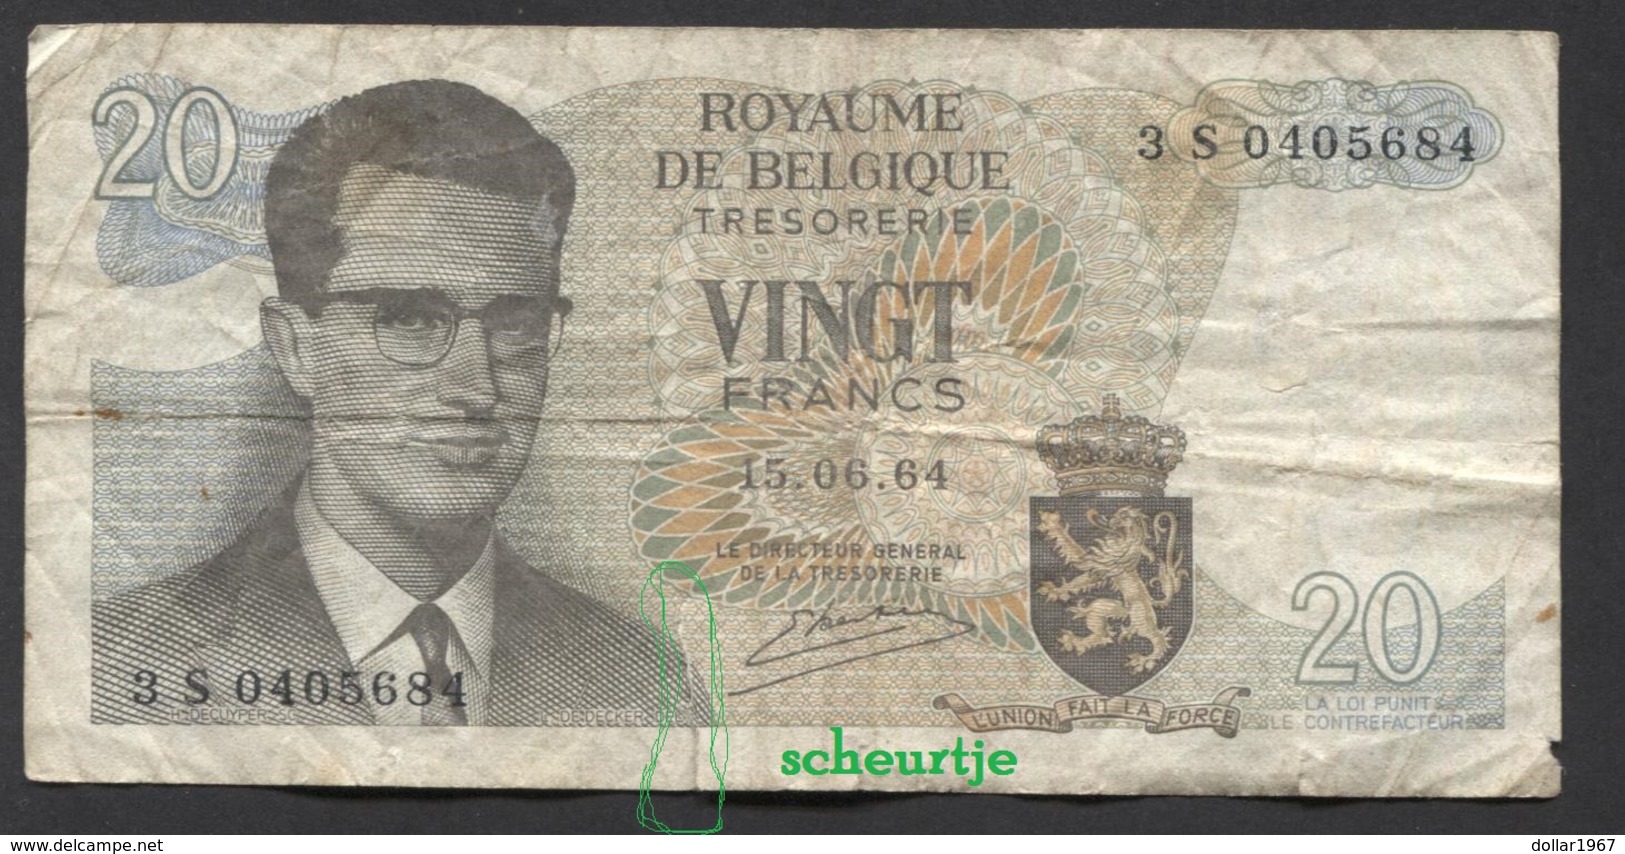 België Belgique Belgium 15 06 1964 -  20 Francs Atomium Baudouin. 3 S 0405684 - 20 Franchi